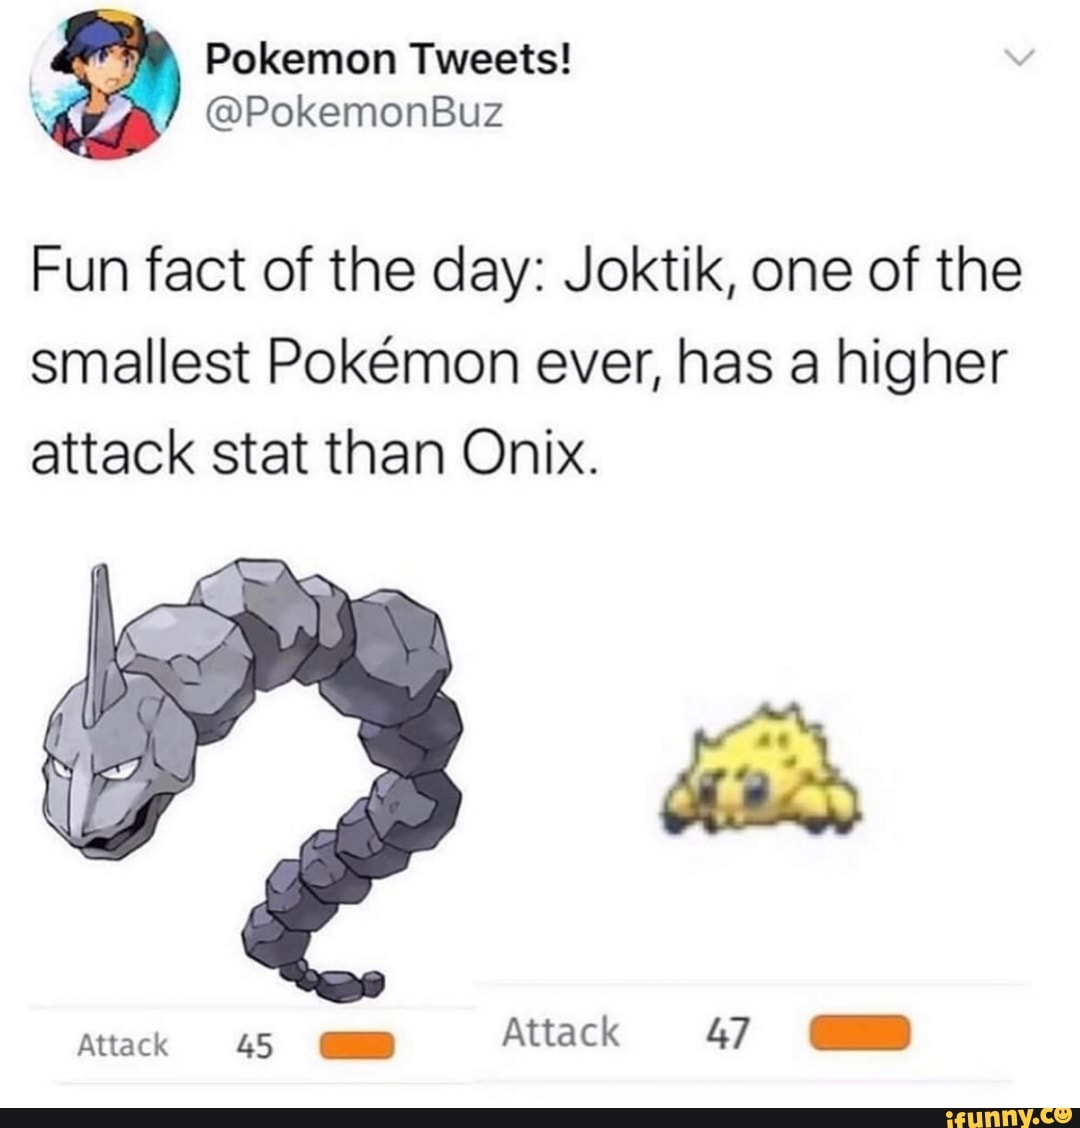 Pokemon Tweets! Fun fact of the day: Joktik, one of the smallest